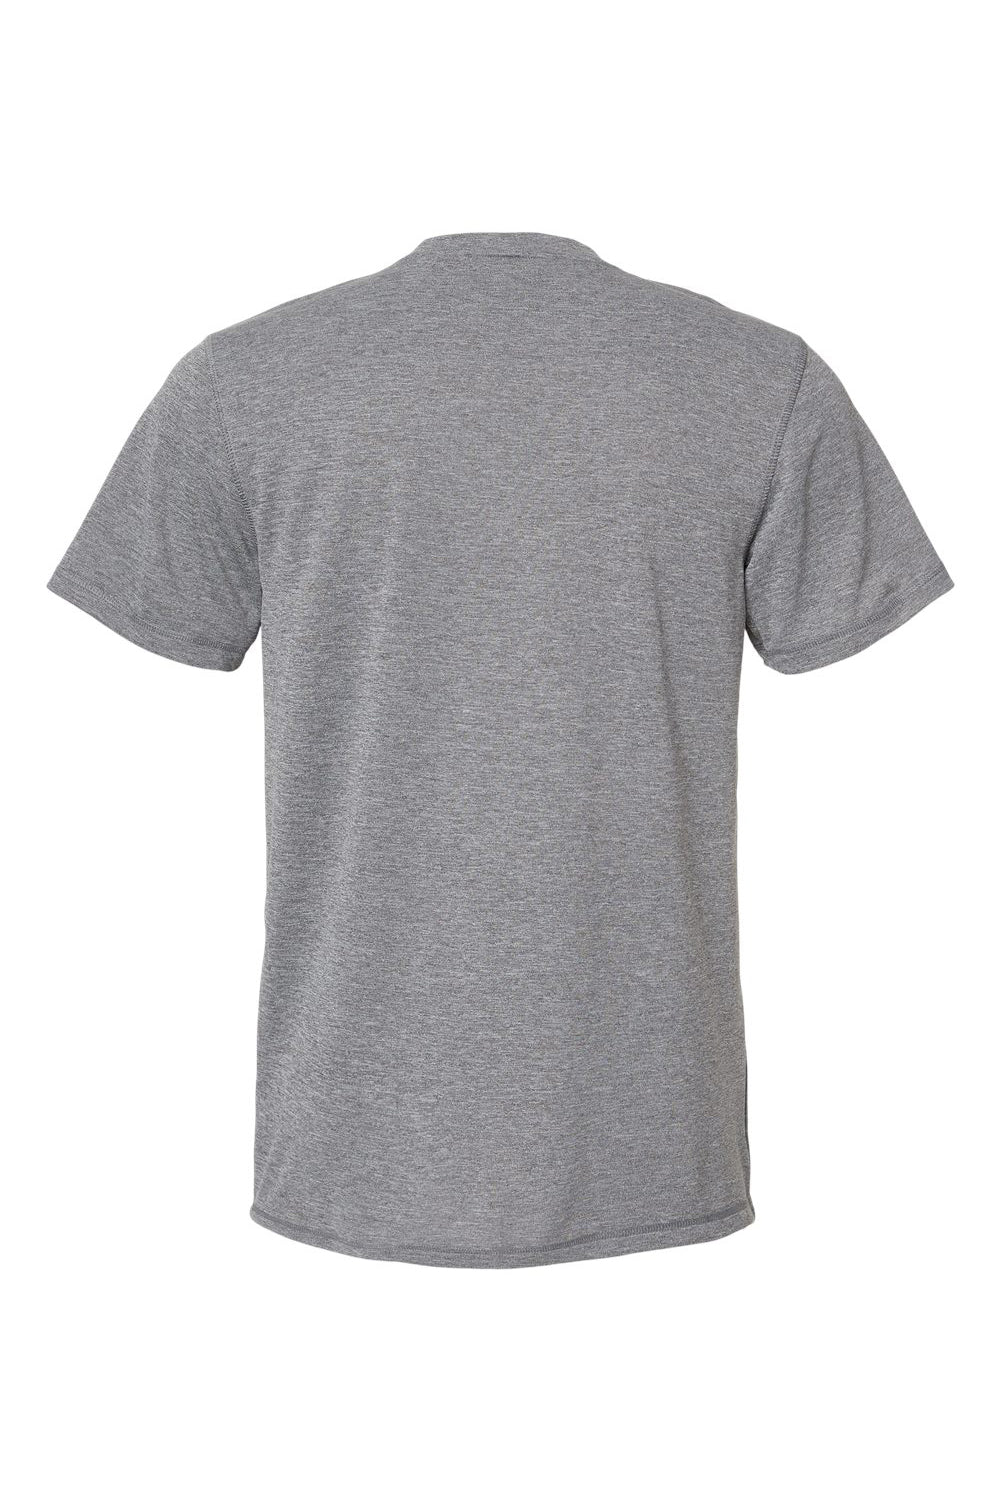 Adidas A376 Mens UPF 50+ Short Sleeve Crewneck T-Shirt Heather Black Flat Back